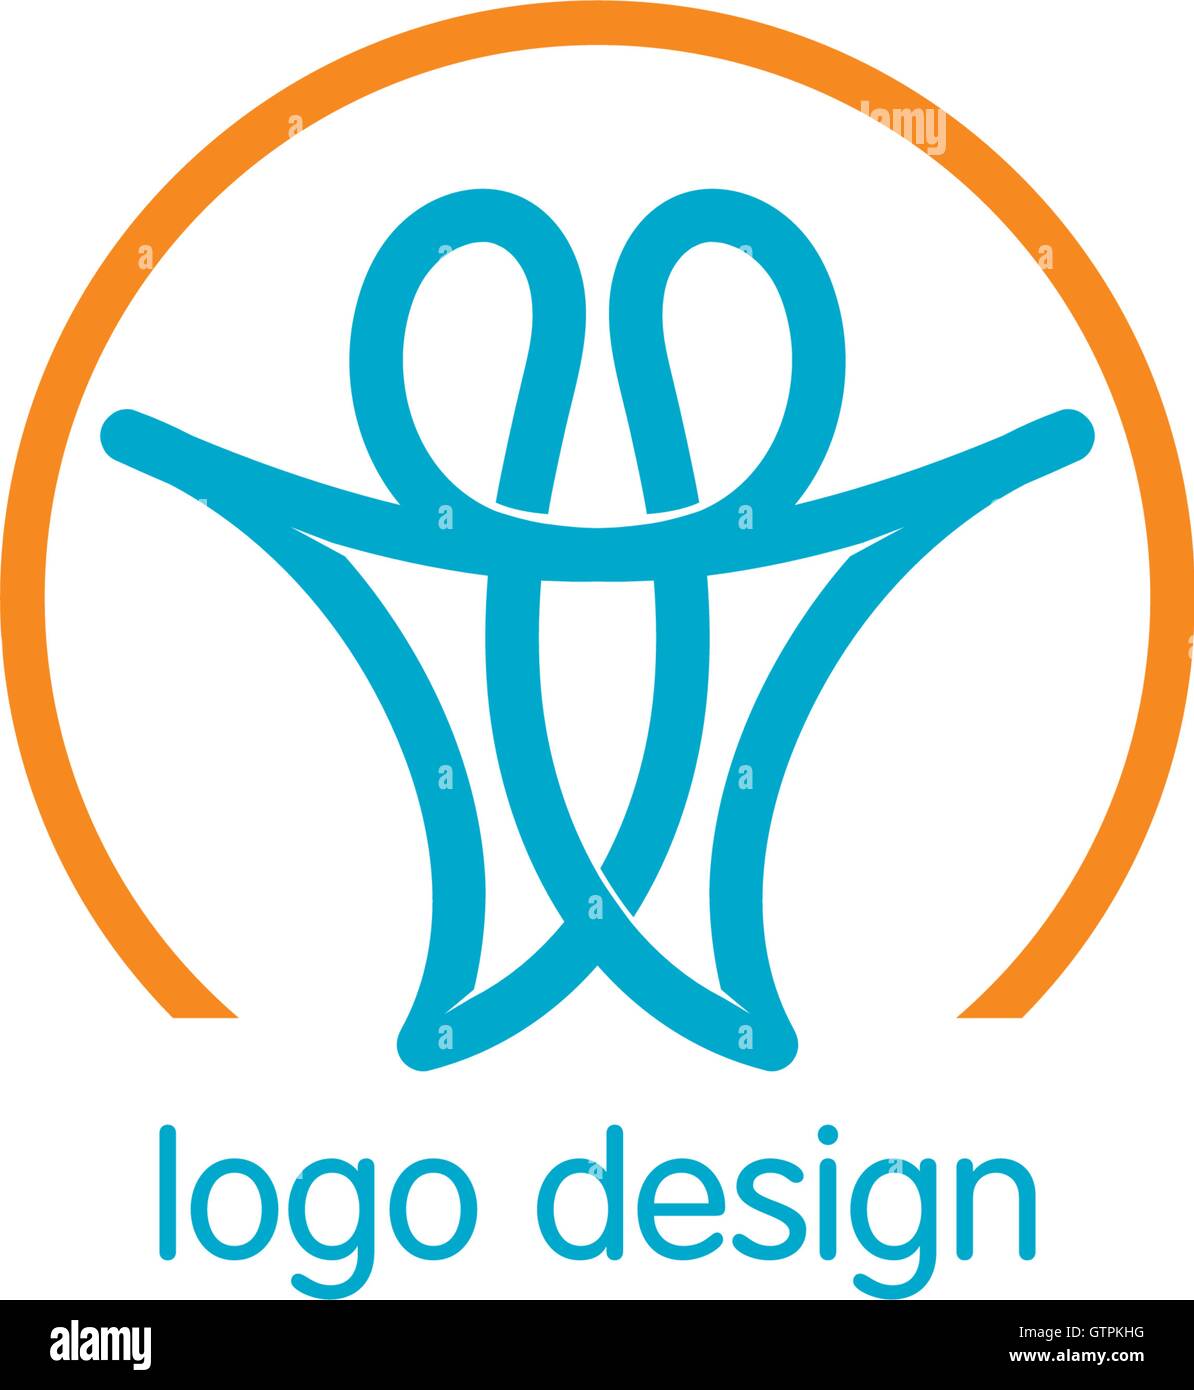 People union lineart logo. Abstract humans logotype. Vector logo design. Stock Vector